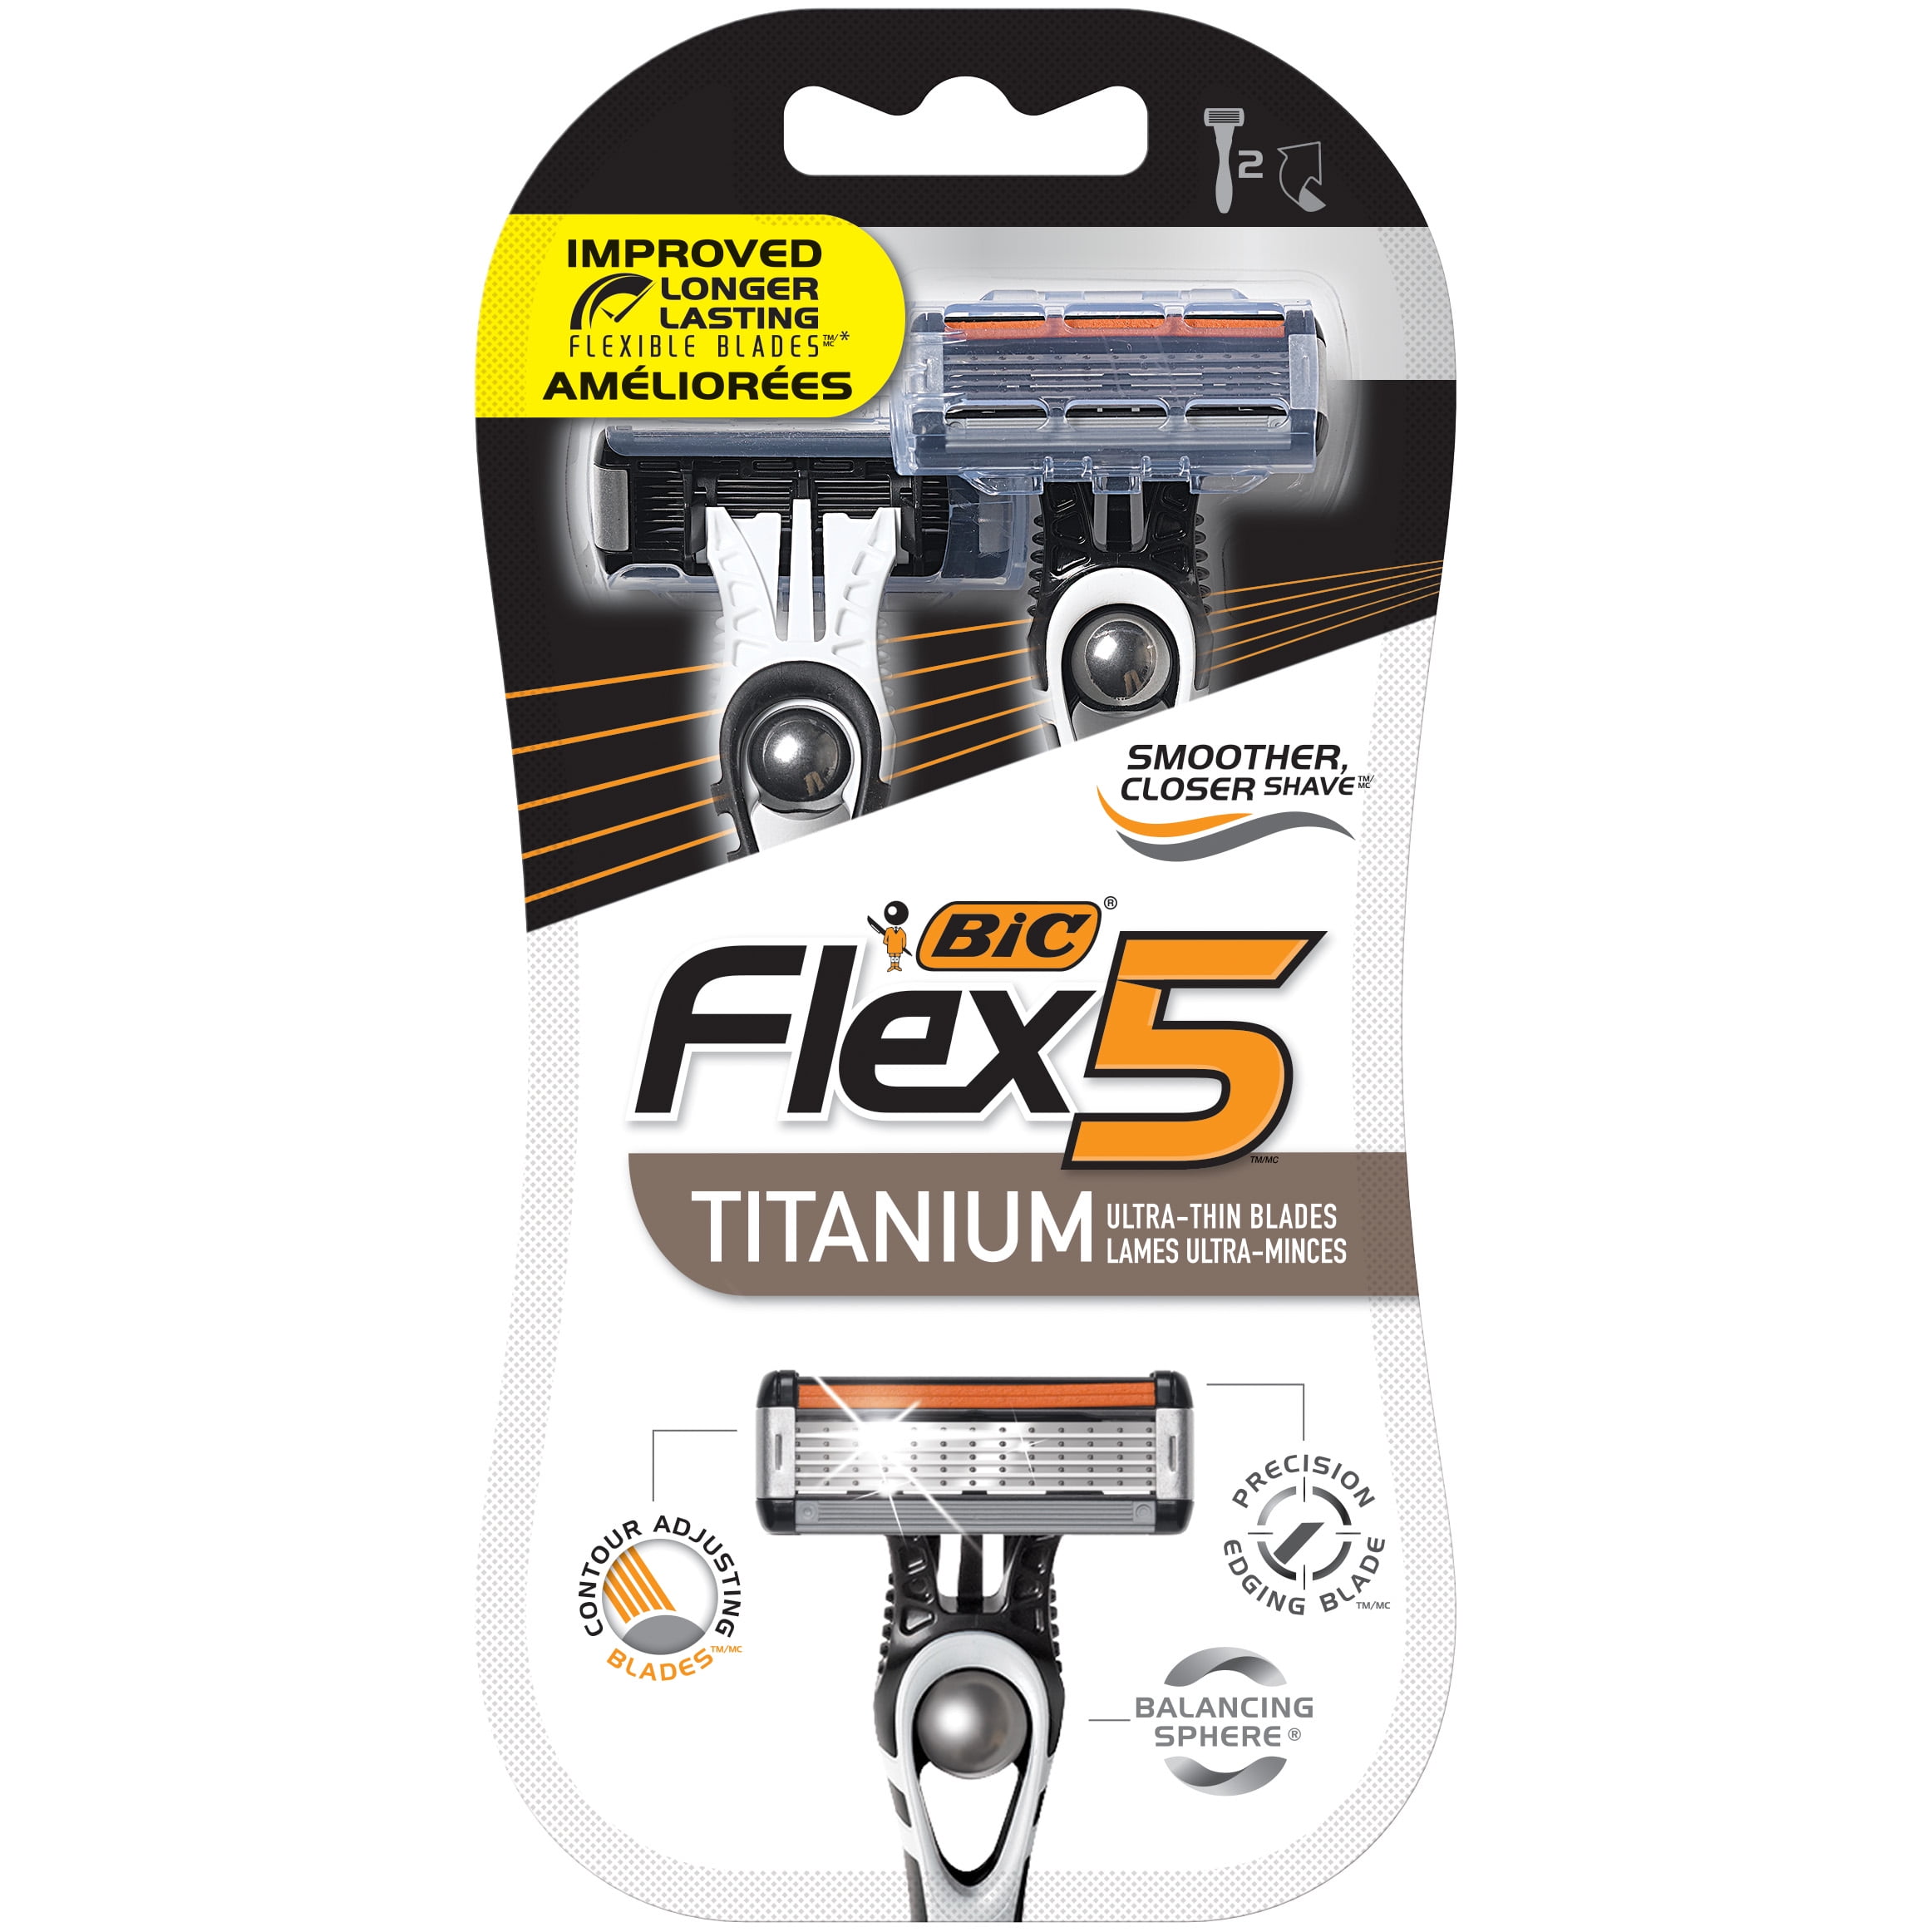 BIC Flex 5 Men's 5 Blade, Disposable Razors, 2-count